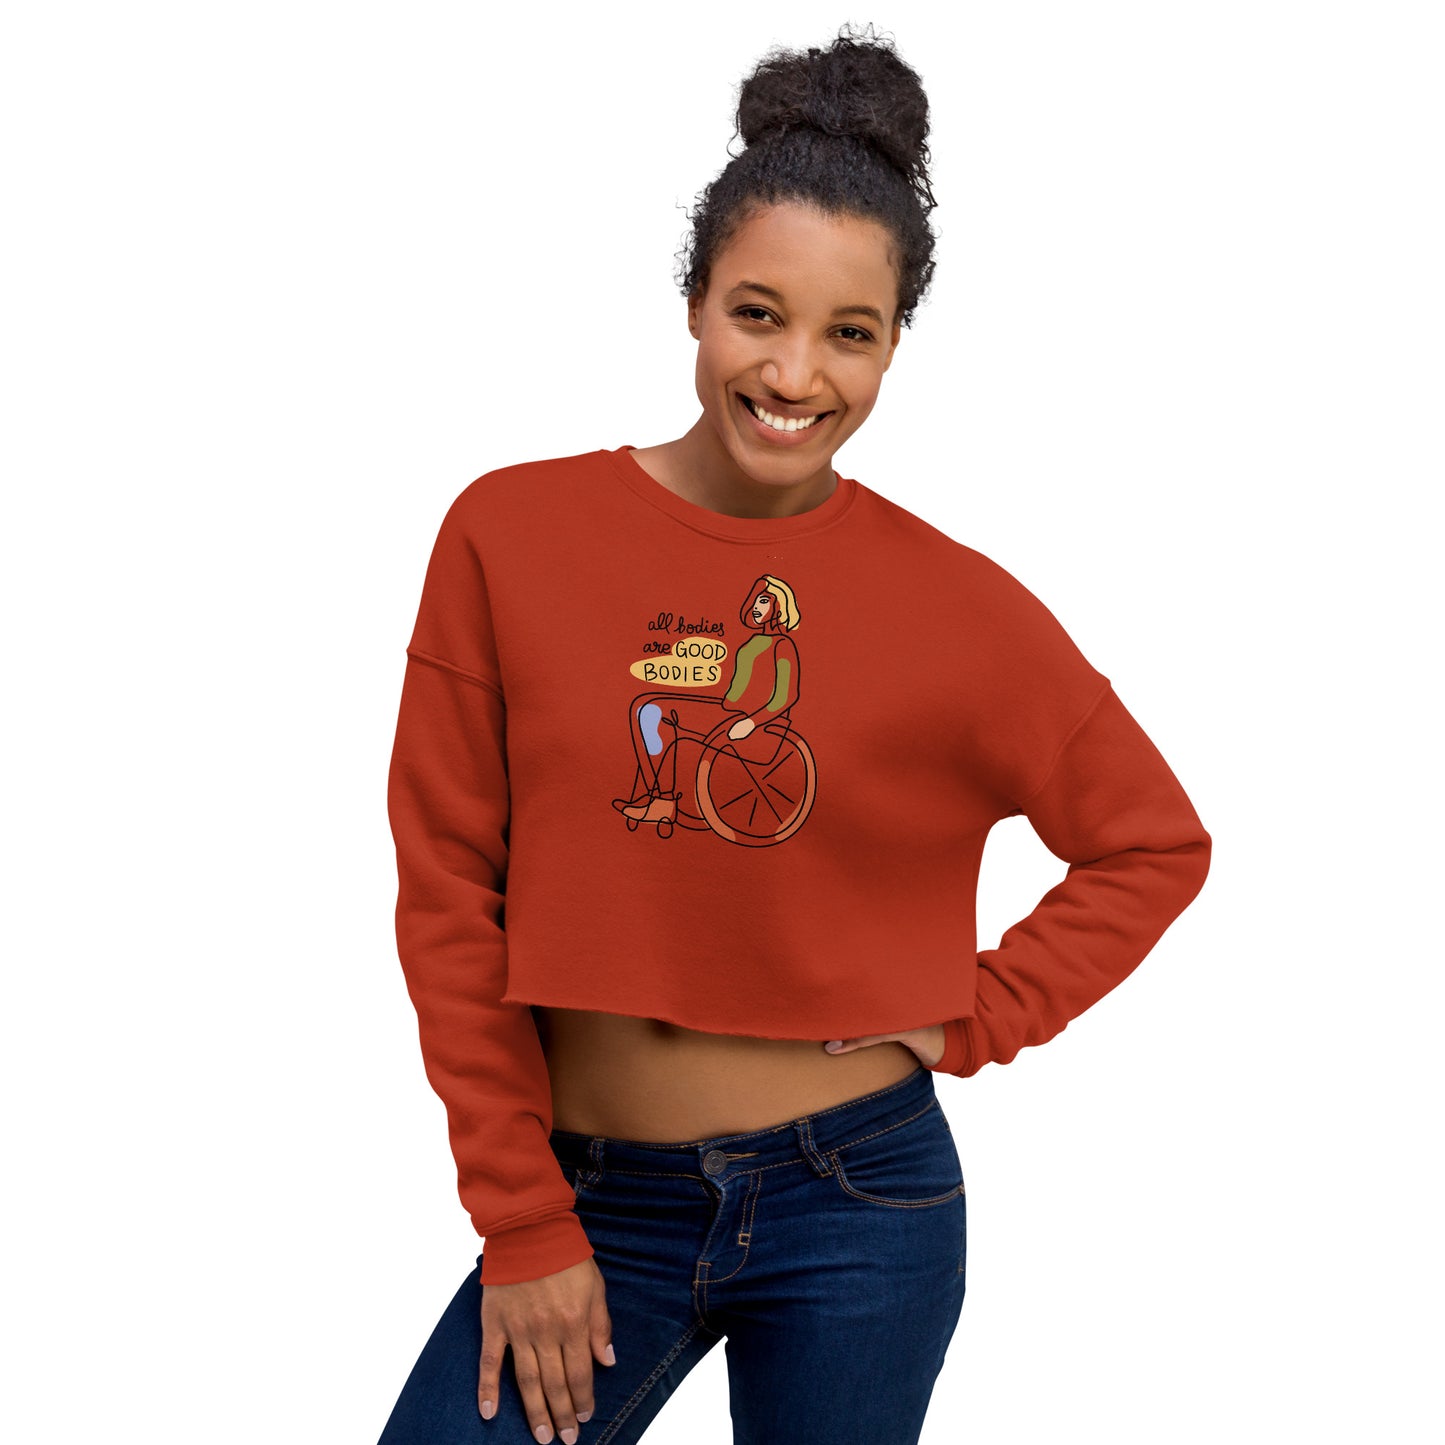 Crop Sweatshirt Womens (All Bodies Are Good Bodies - Inspiration 003)